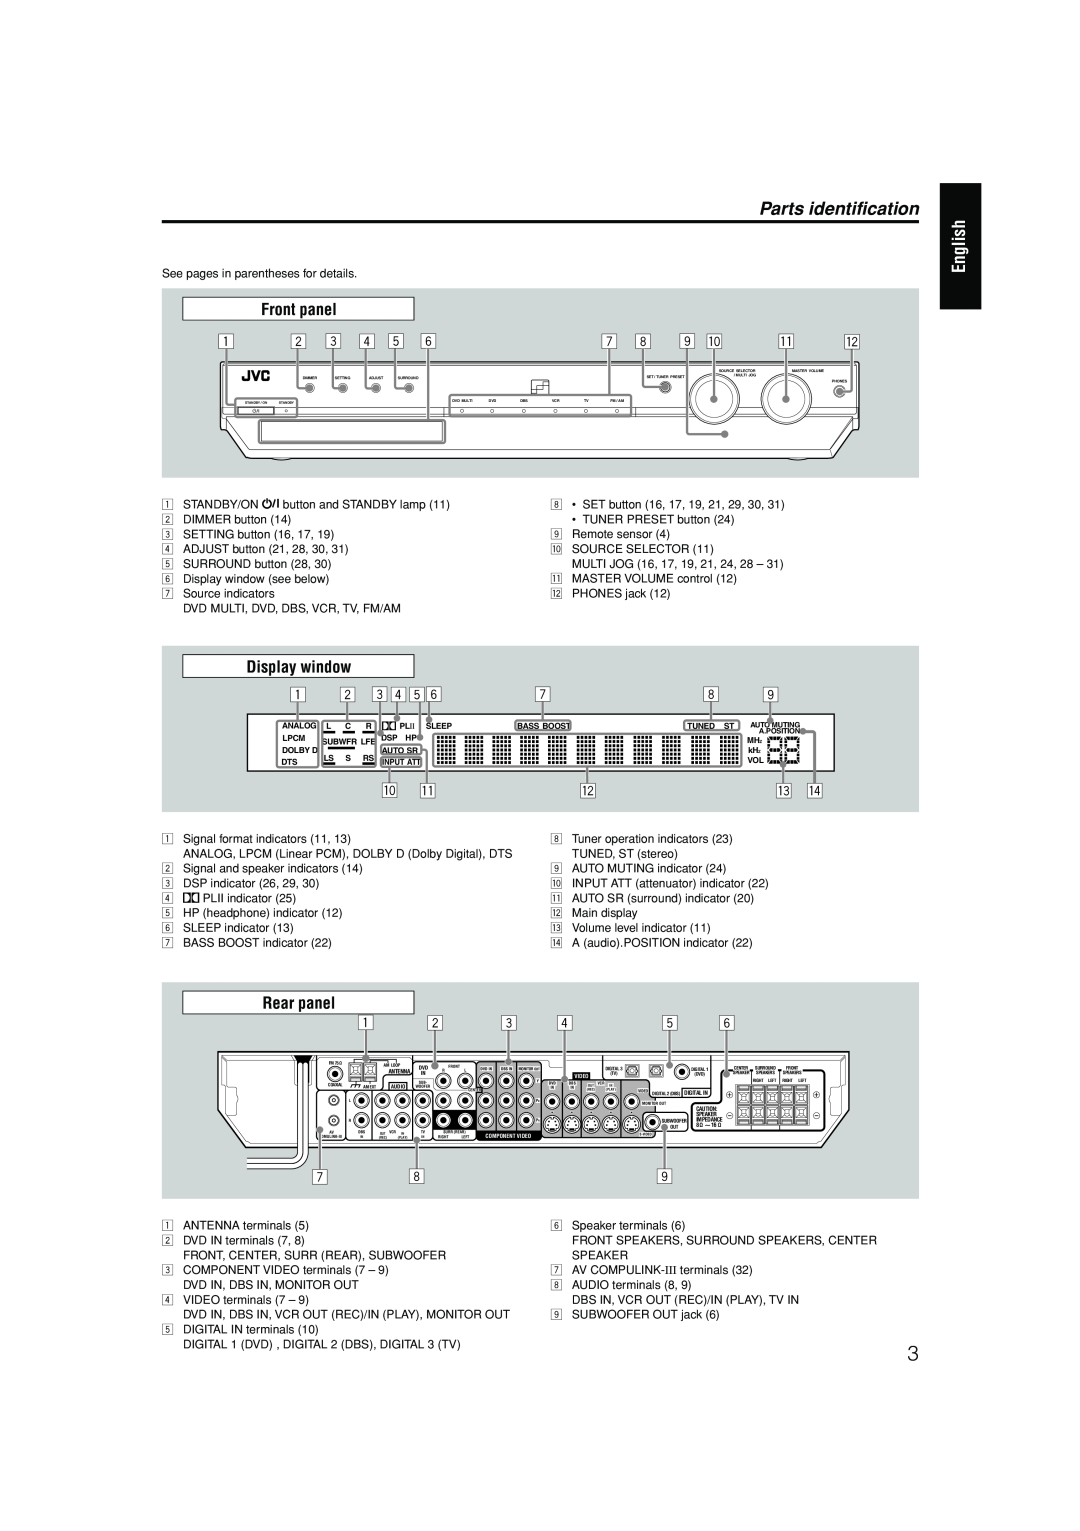 JVC RX-ES1SL manual Parts identification, English, Front panel, Source Selector 